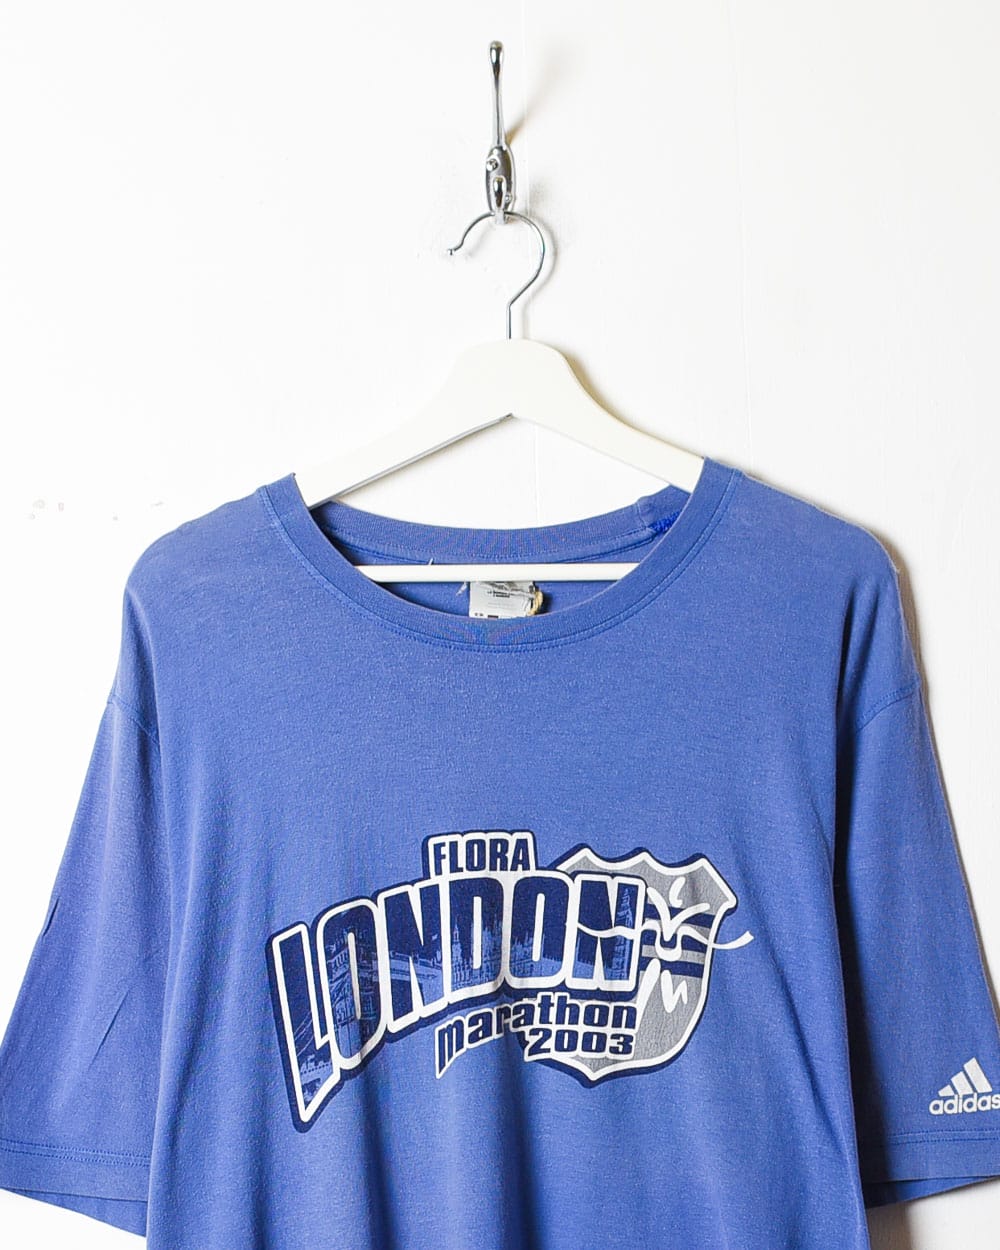 Blue Adidas Flora London Marathon 2003 T-Shirt - X-Large